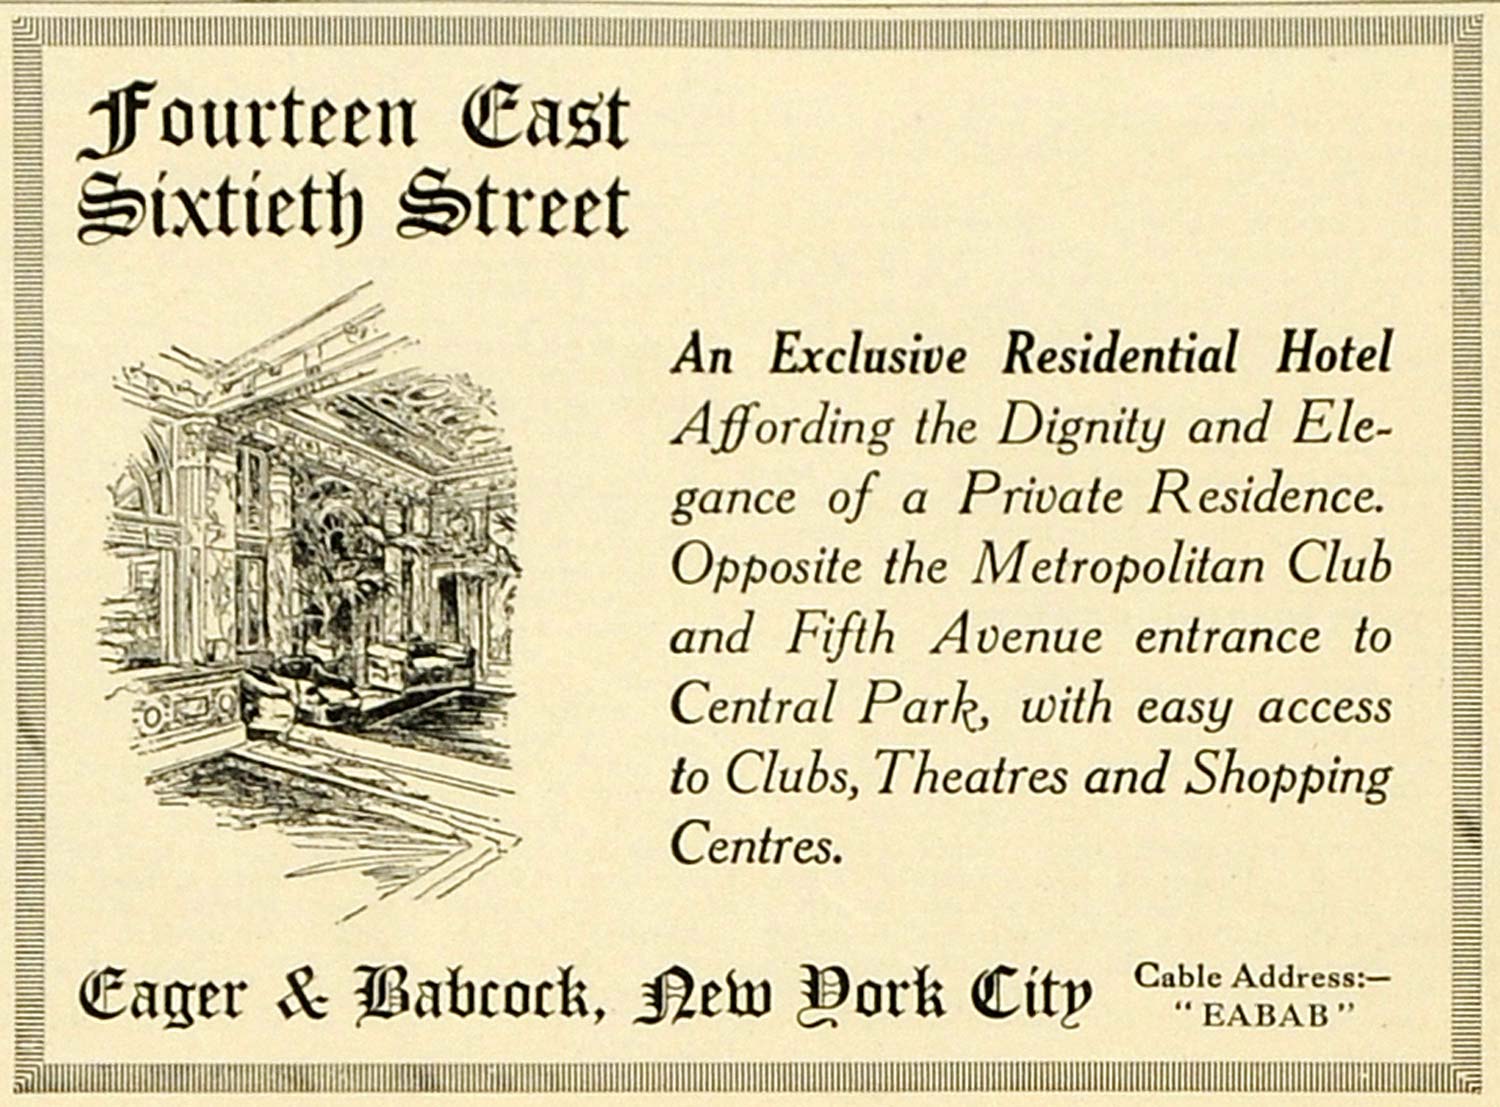 1922 Ad Eager Babcock Hotel Metropolitan Club Central Park Theatre Shopping SCA3